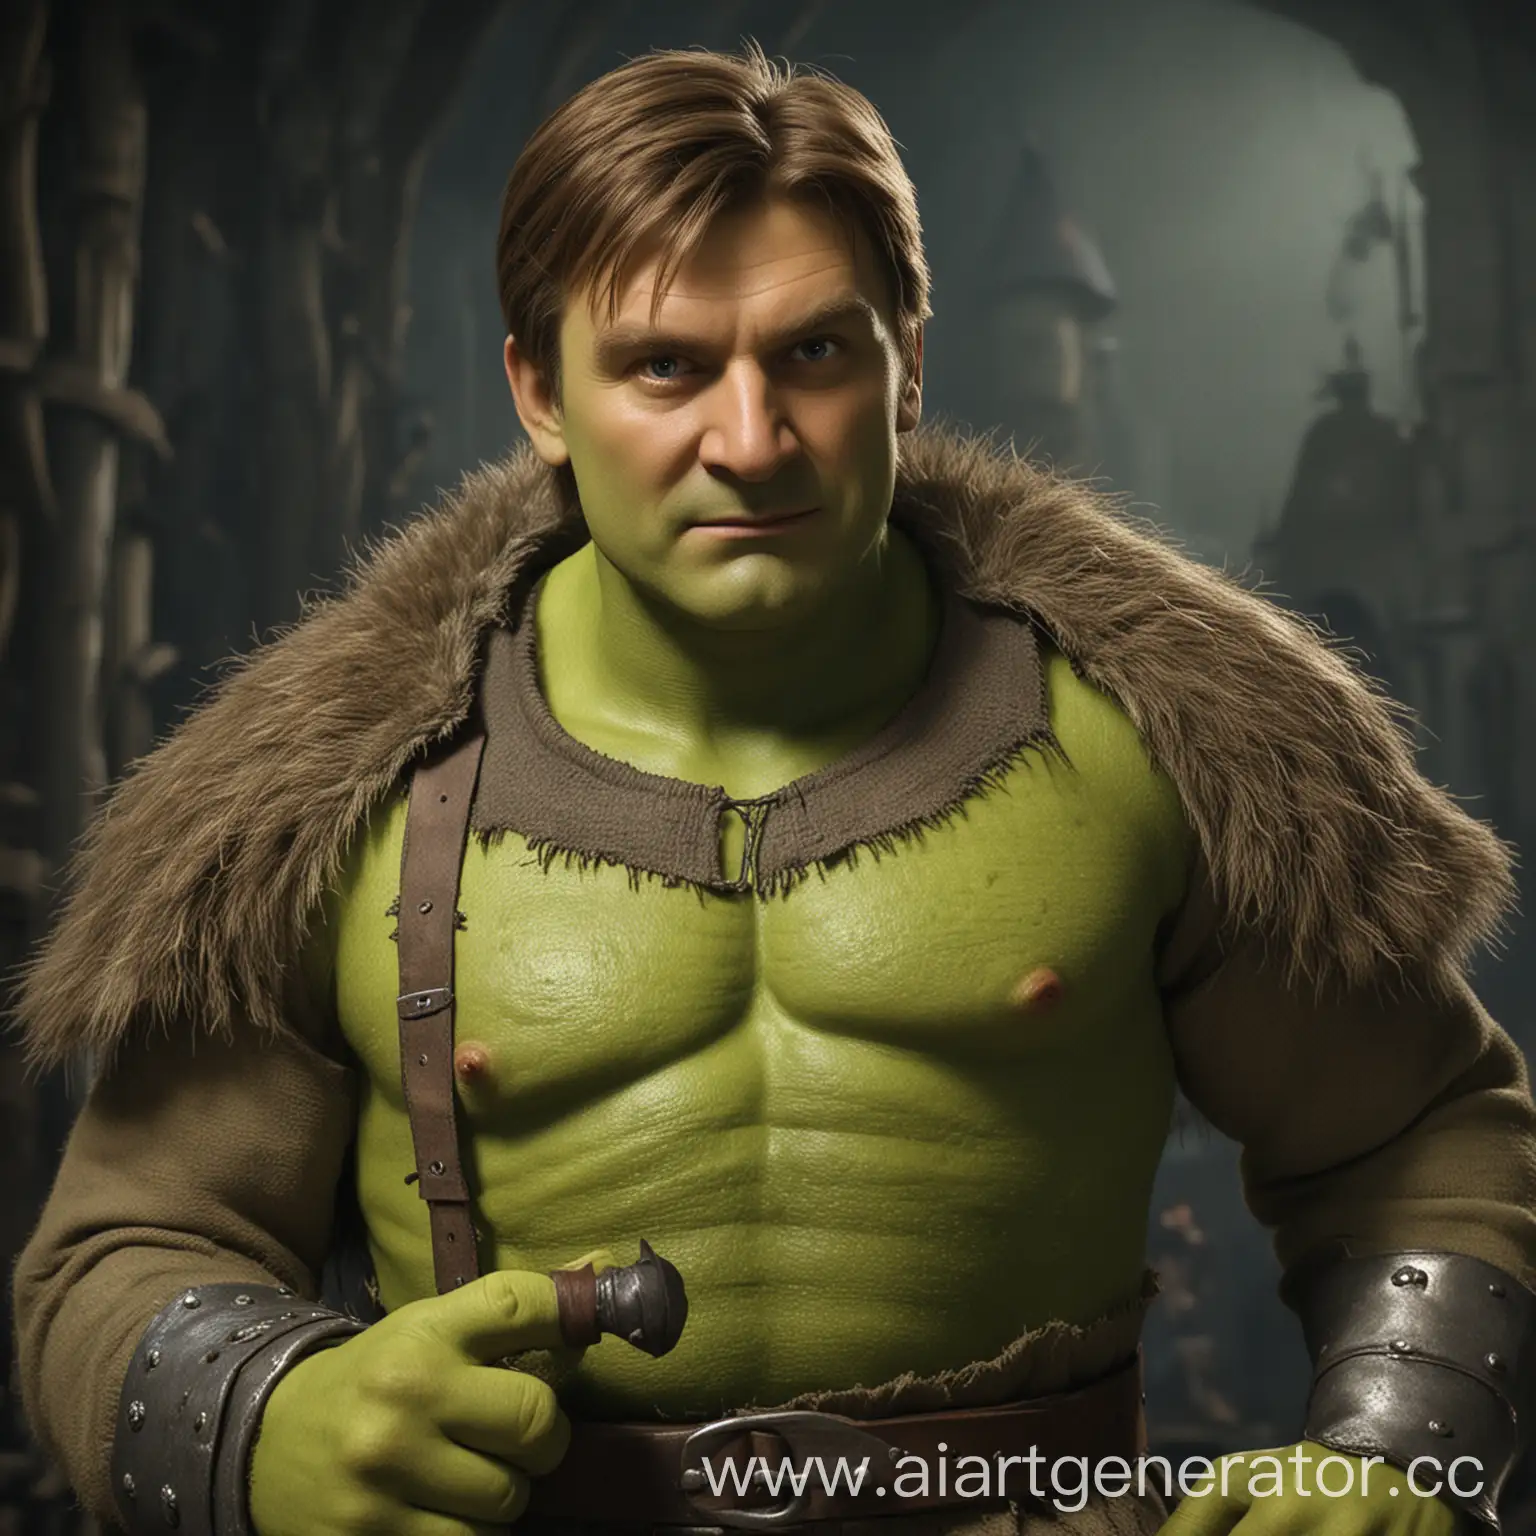 Nikolay-Baskov-Rescues-Shrek-from-Perilous-Situation